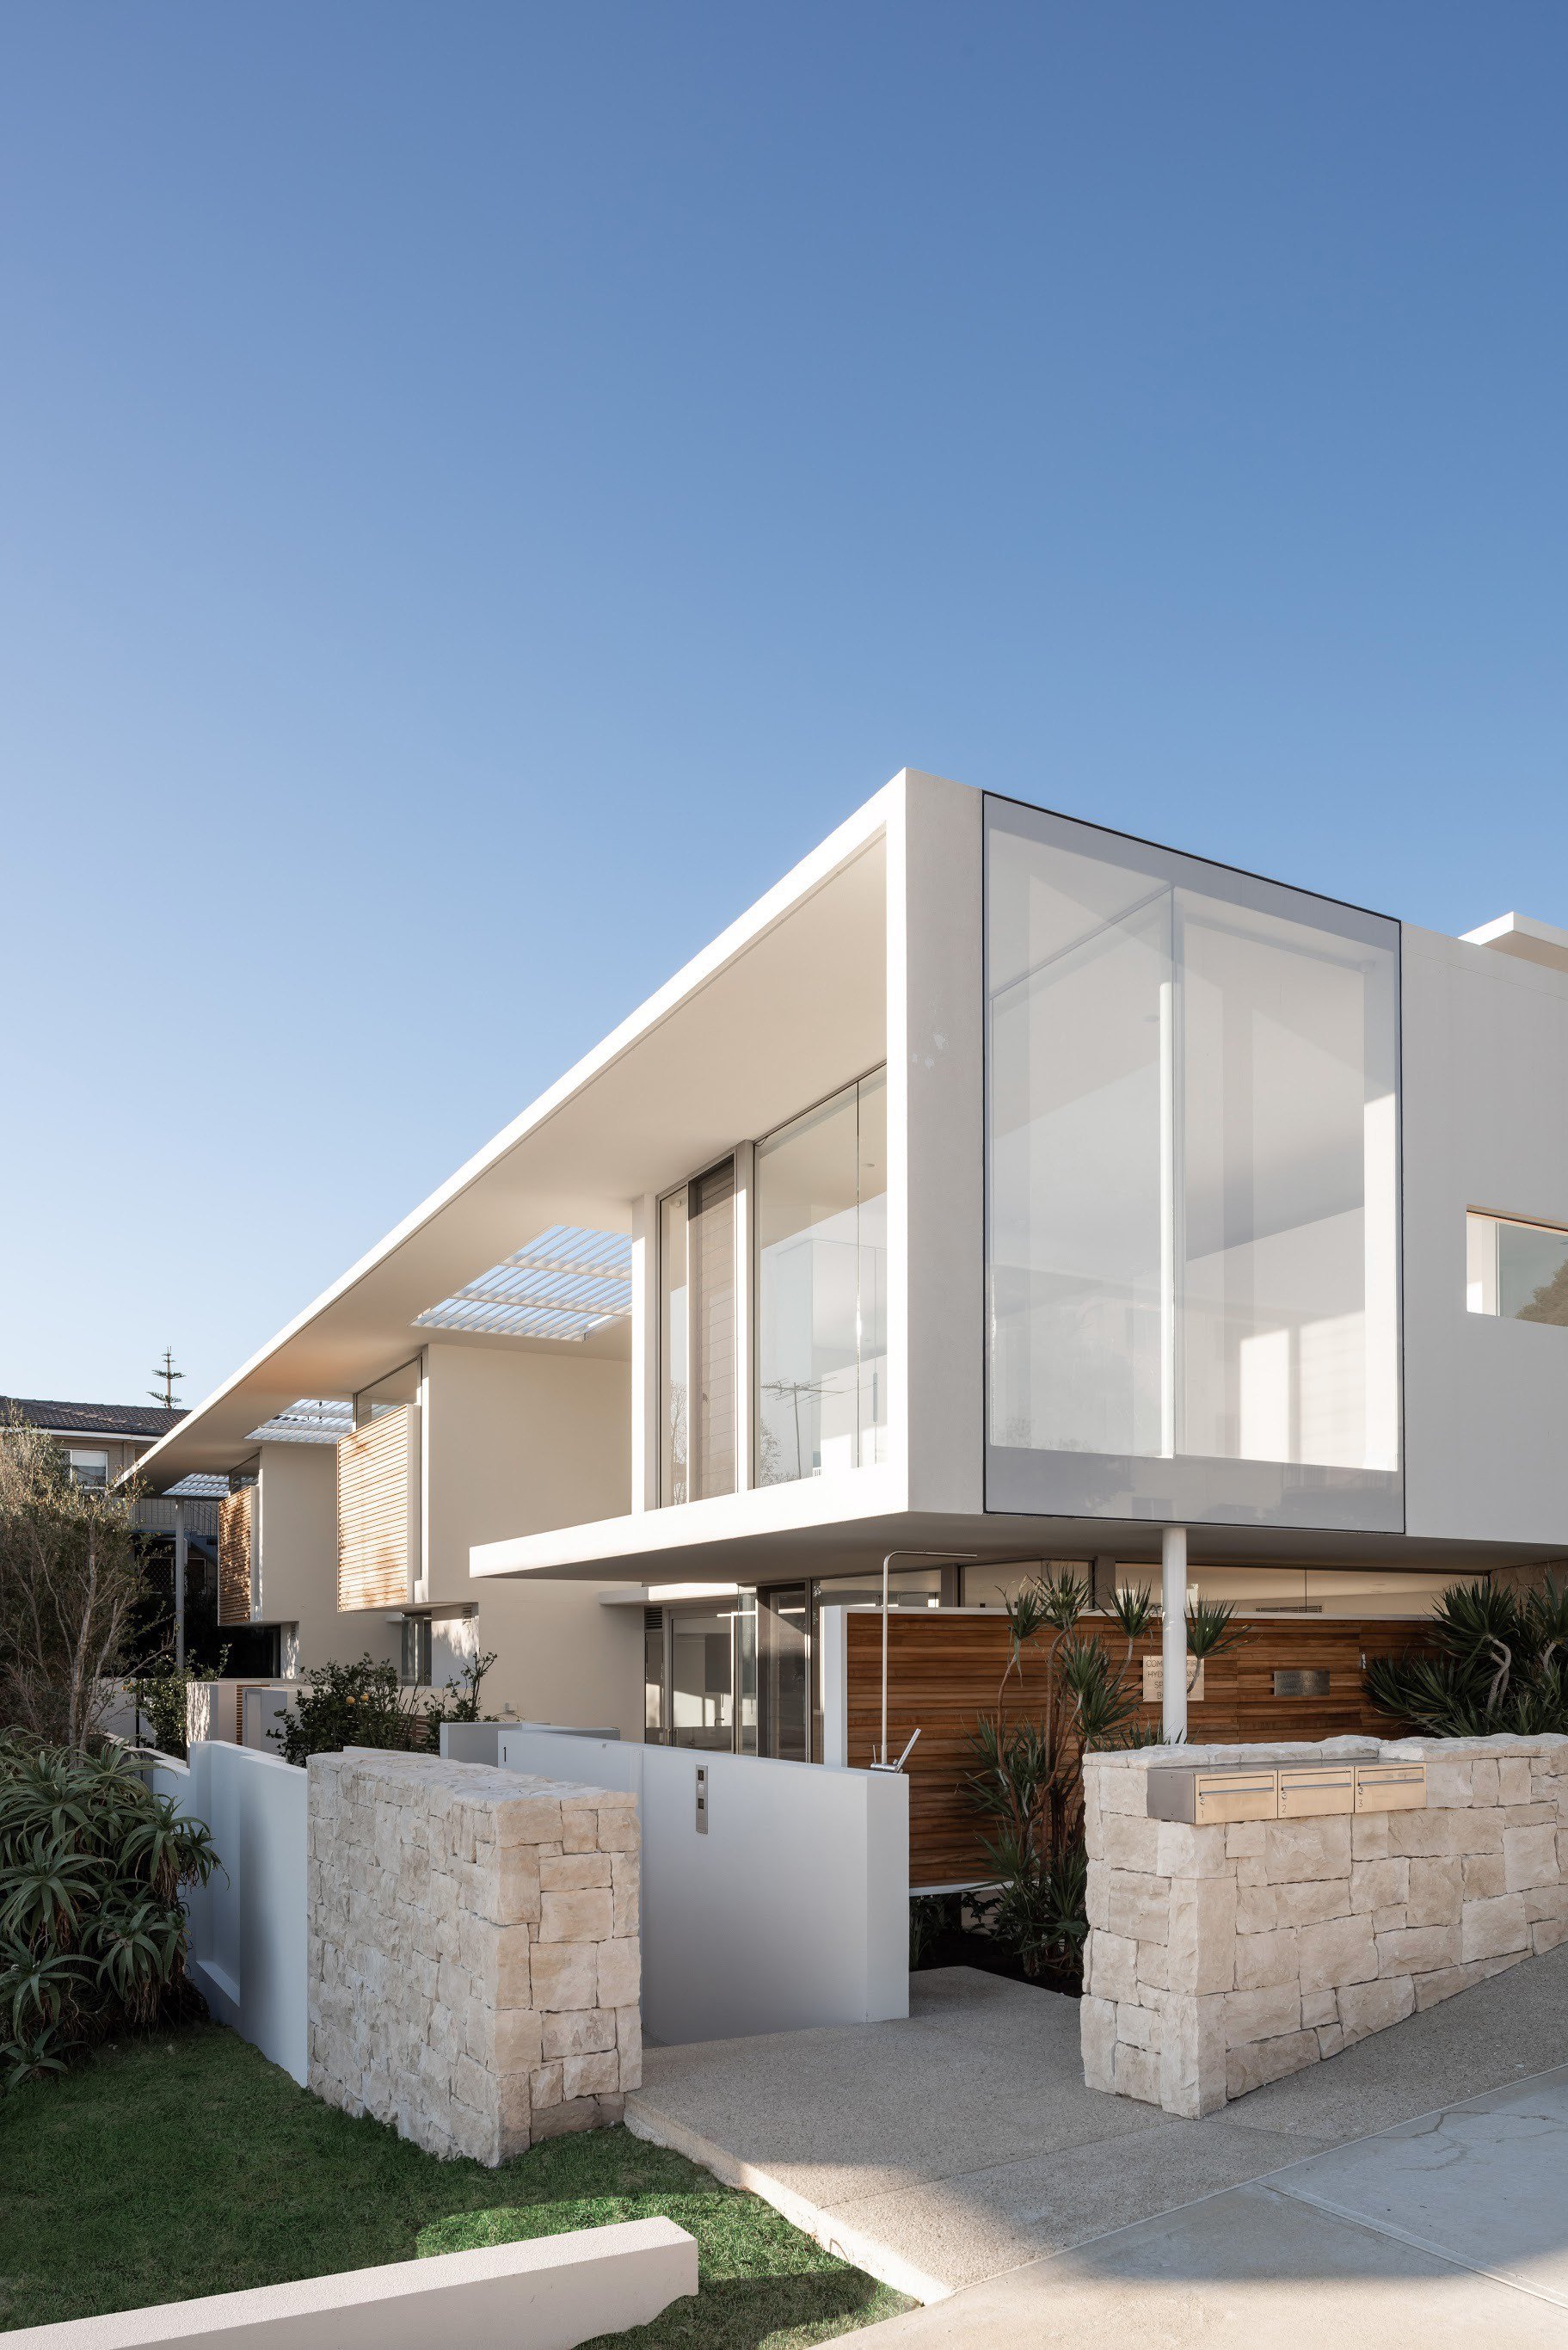 Modernist apartments - Overton Terraces - Braham architects - exterior